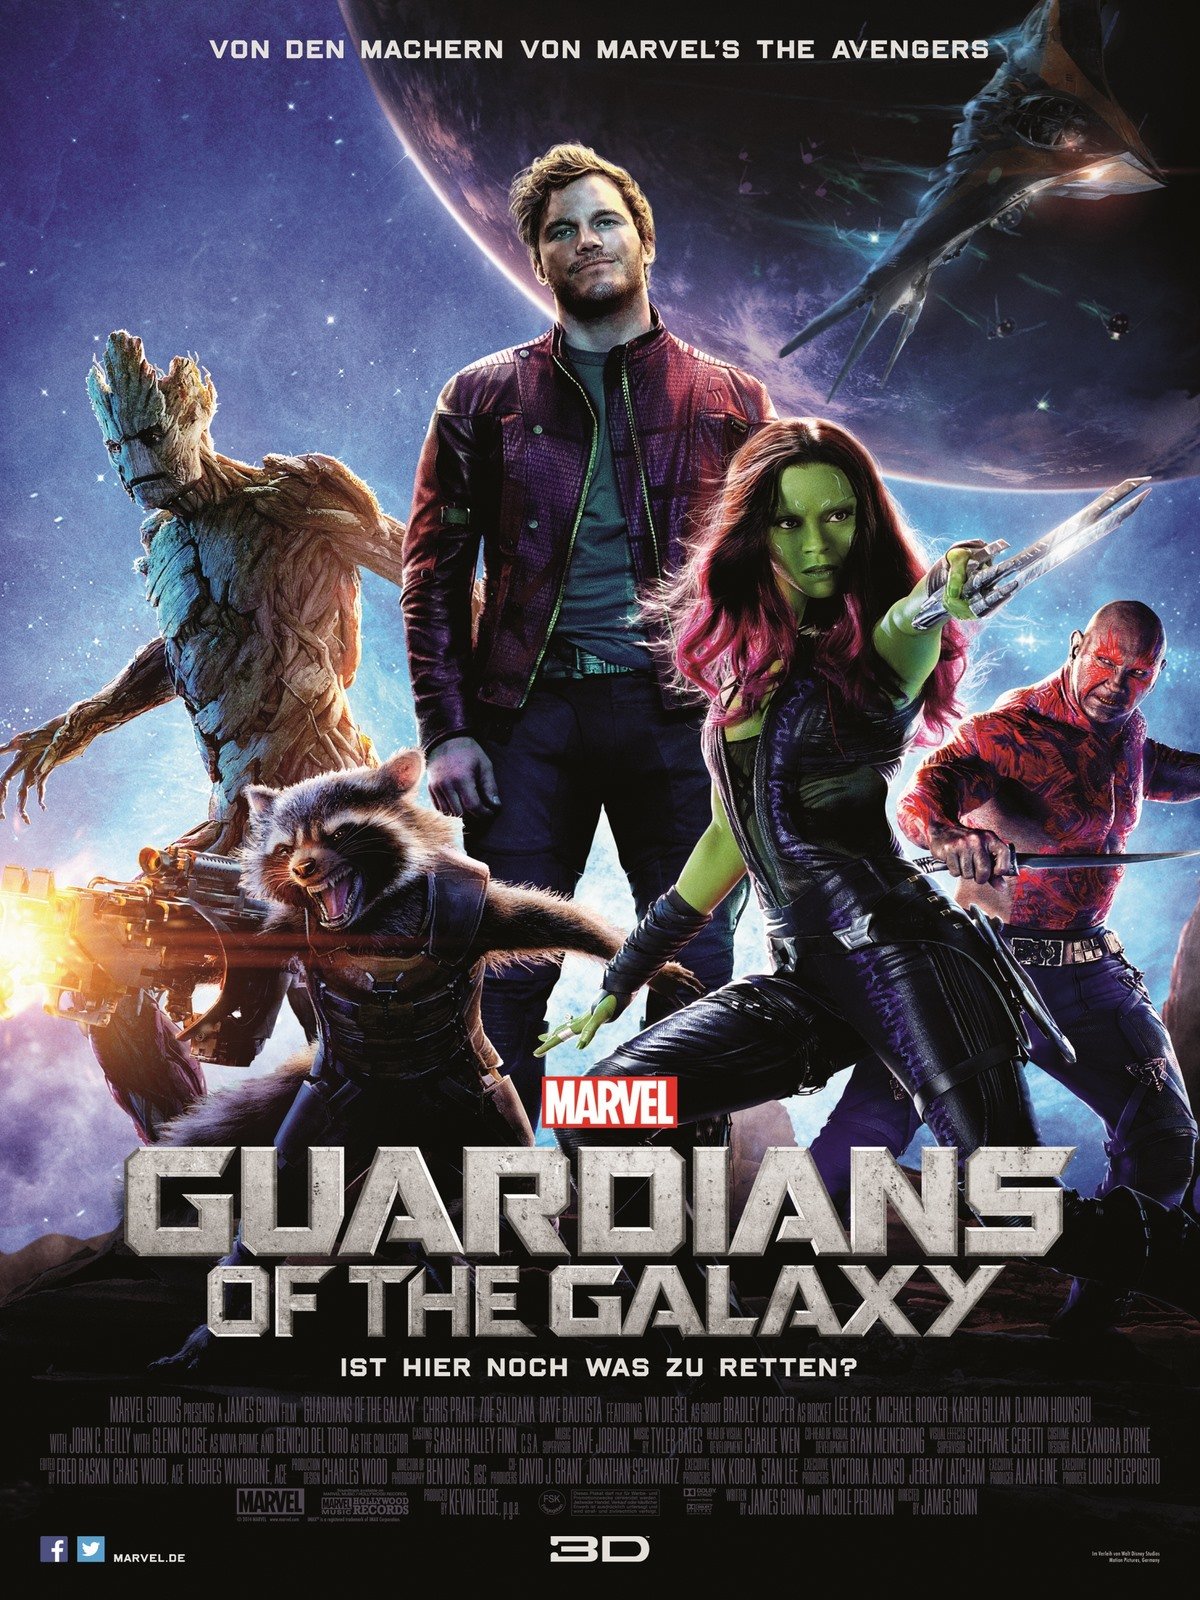 Guardians Of The Galaxy: schauspieler, regie, produktion - Filme ...